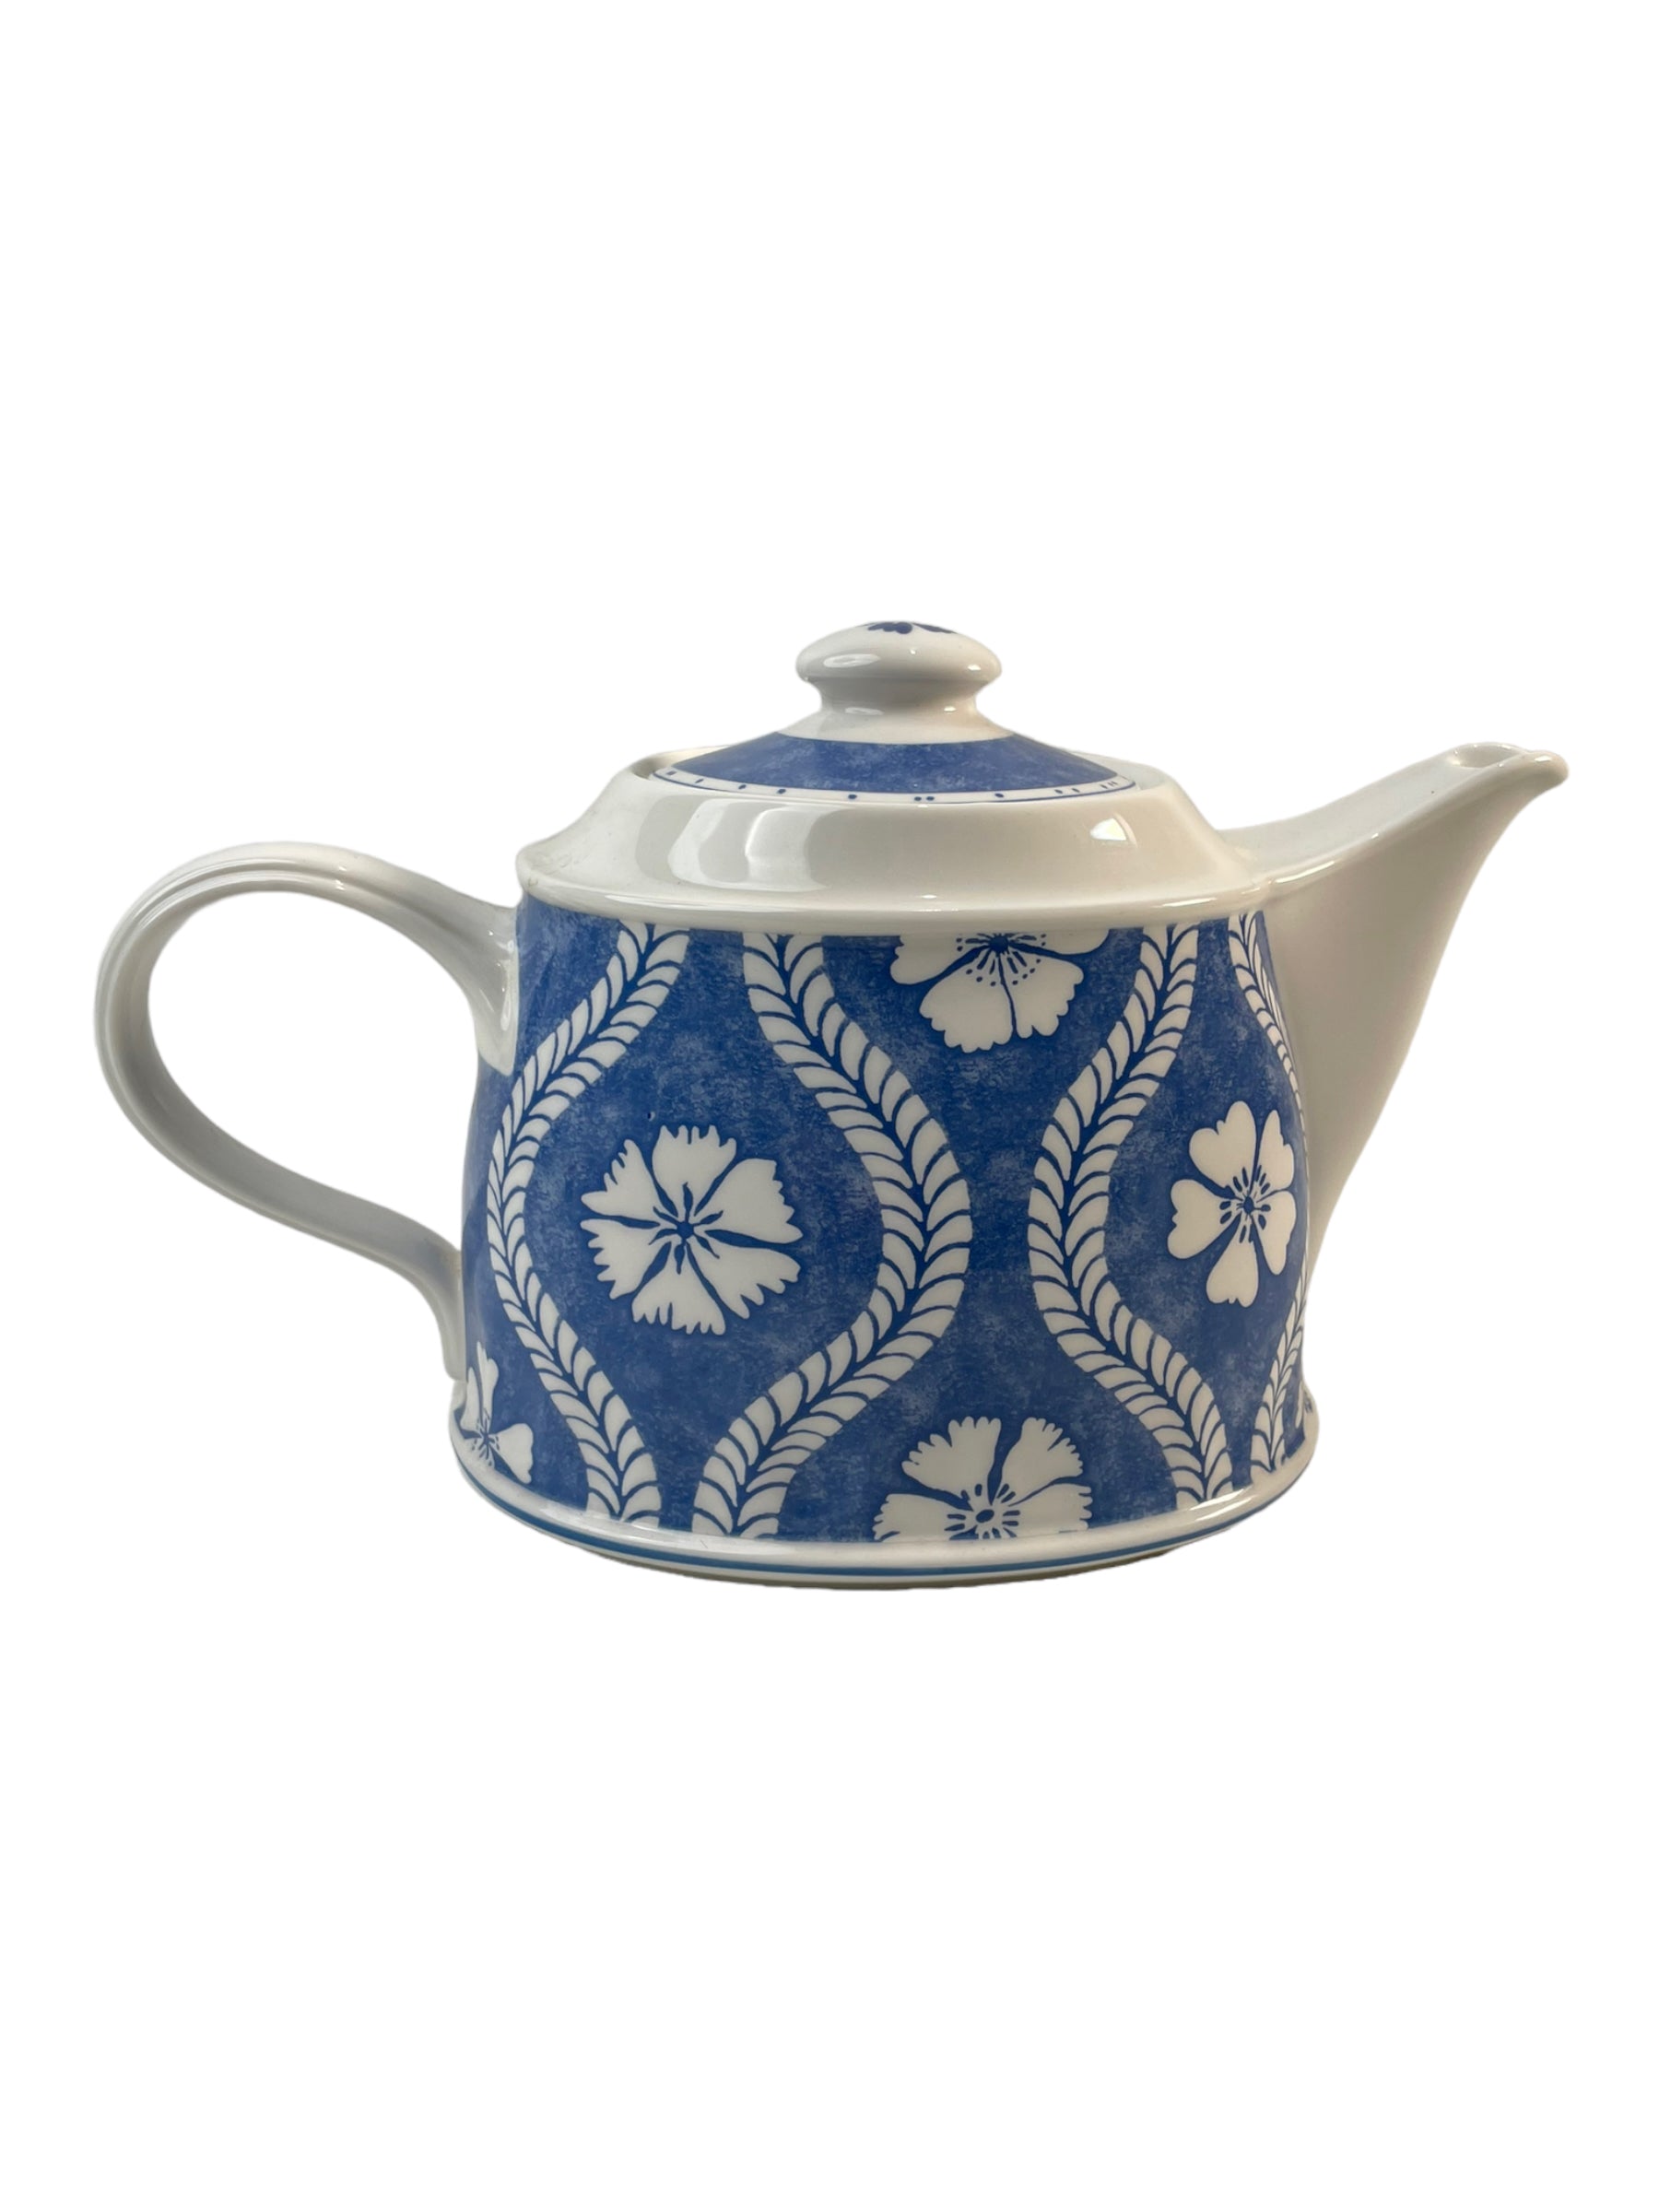 Villeroy and Boch Ceramic Teapot, Milk Jug, and Sugar Bowl set